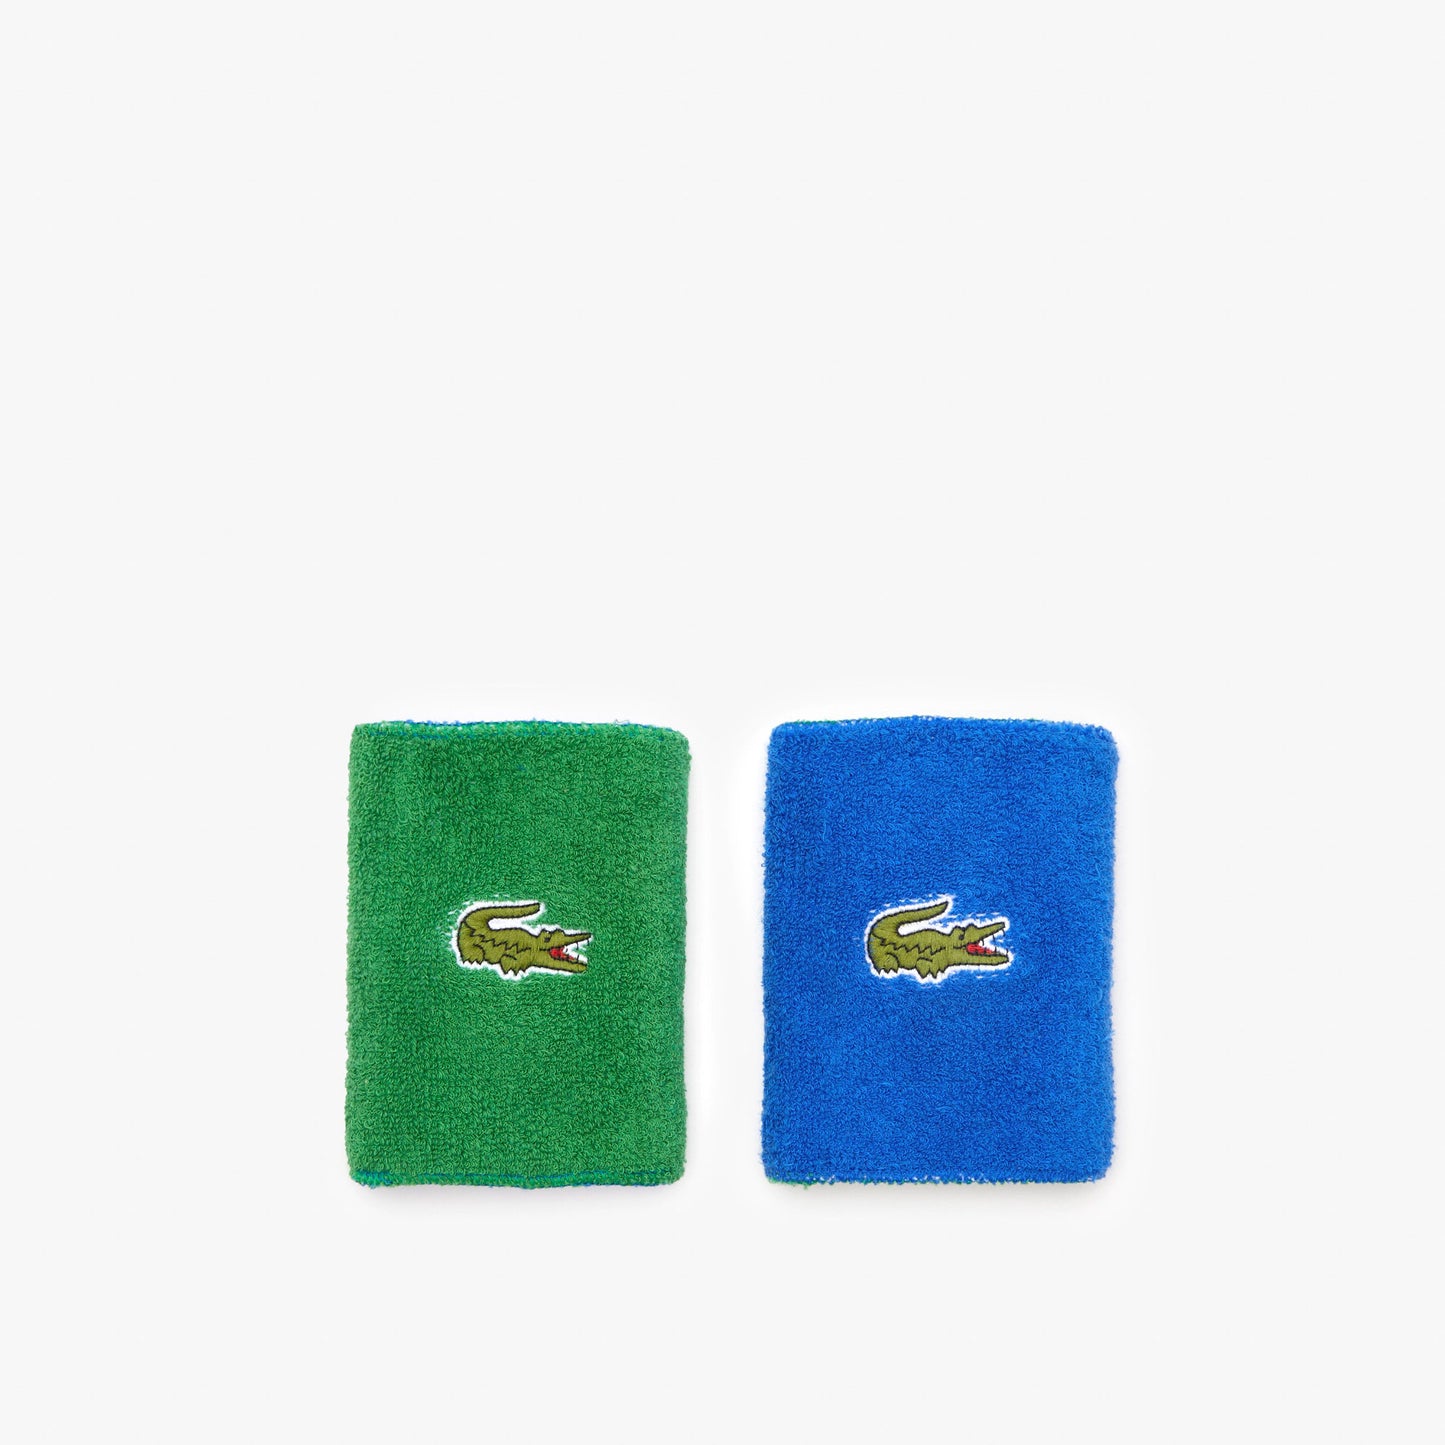 Lacoste Tennis Wristbands Blue/Green (1)